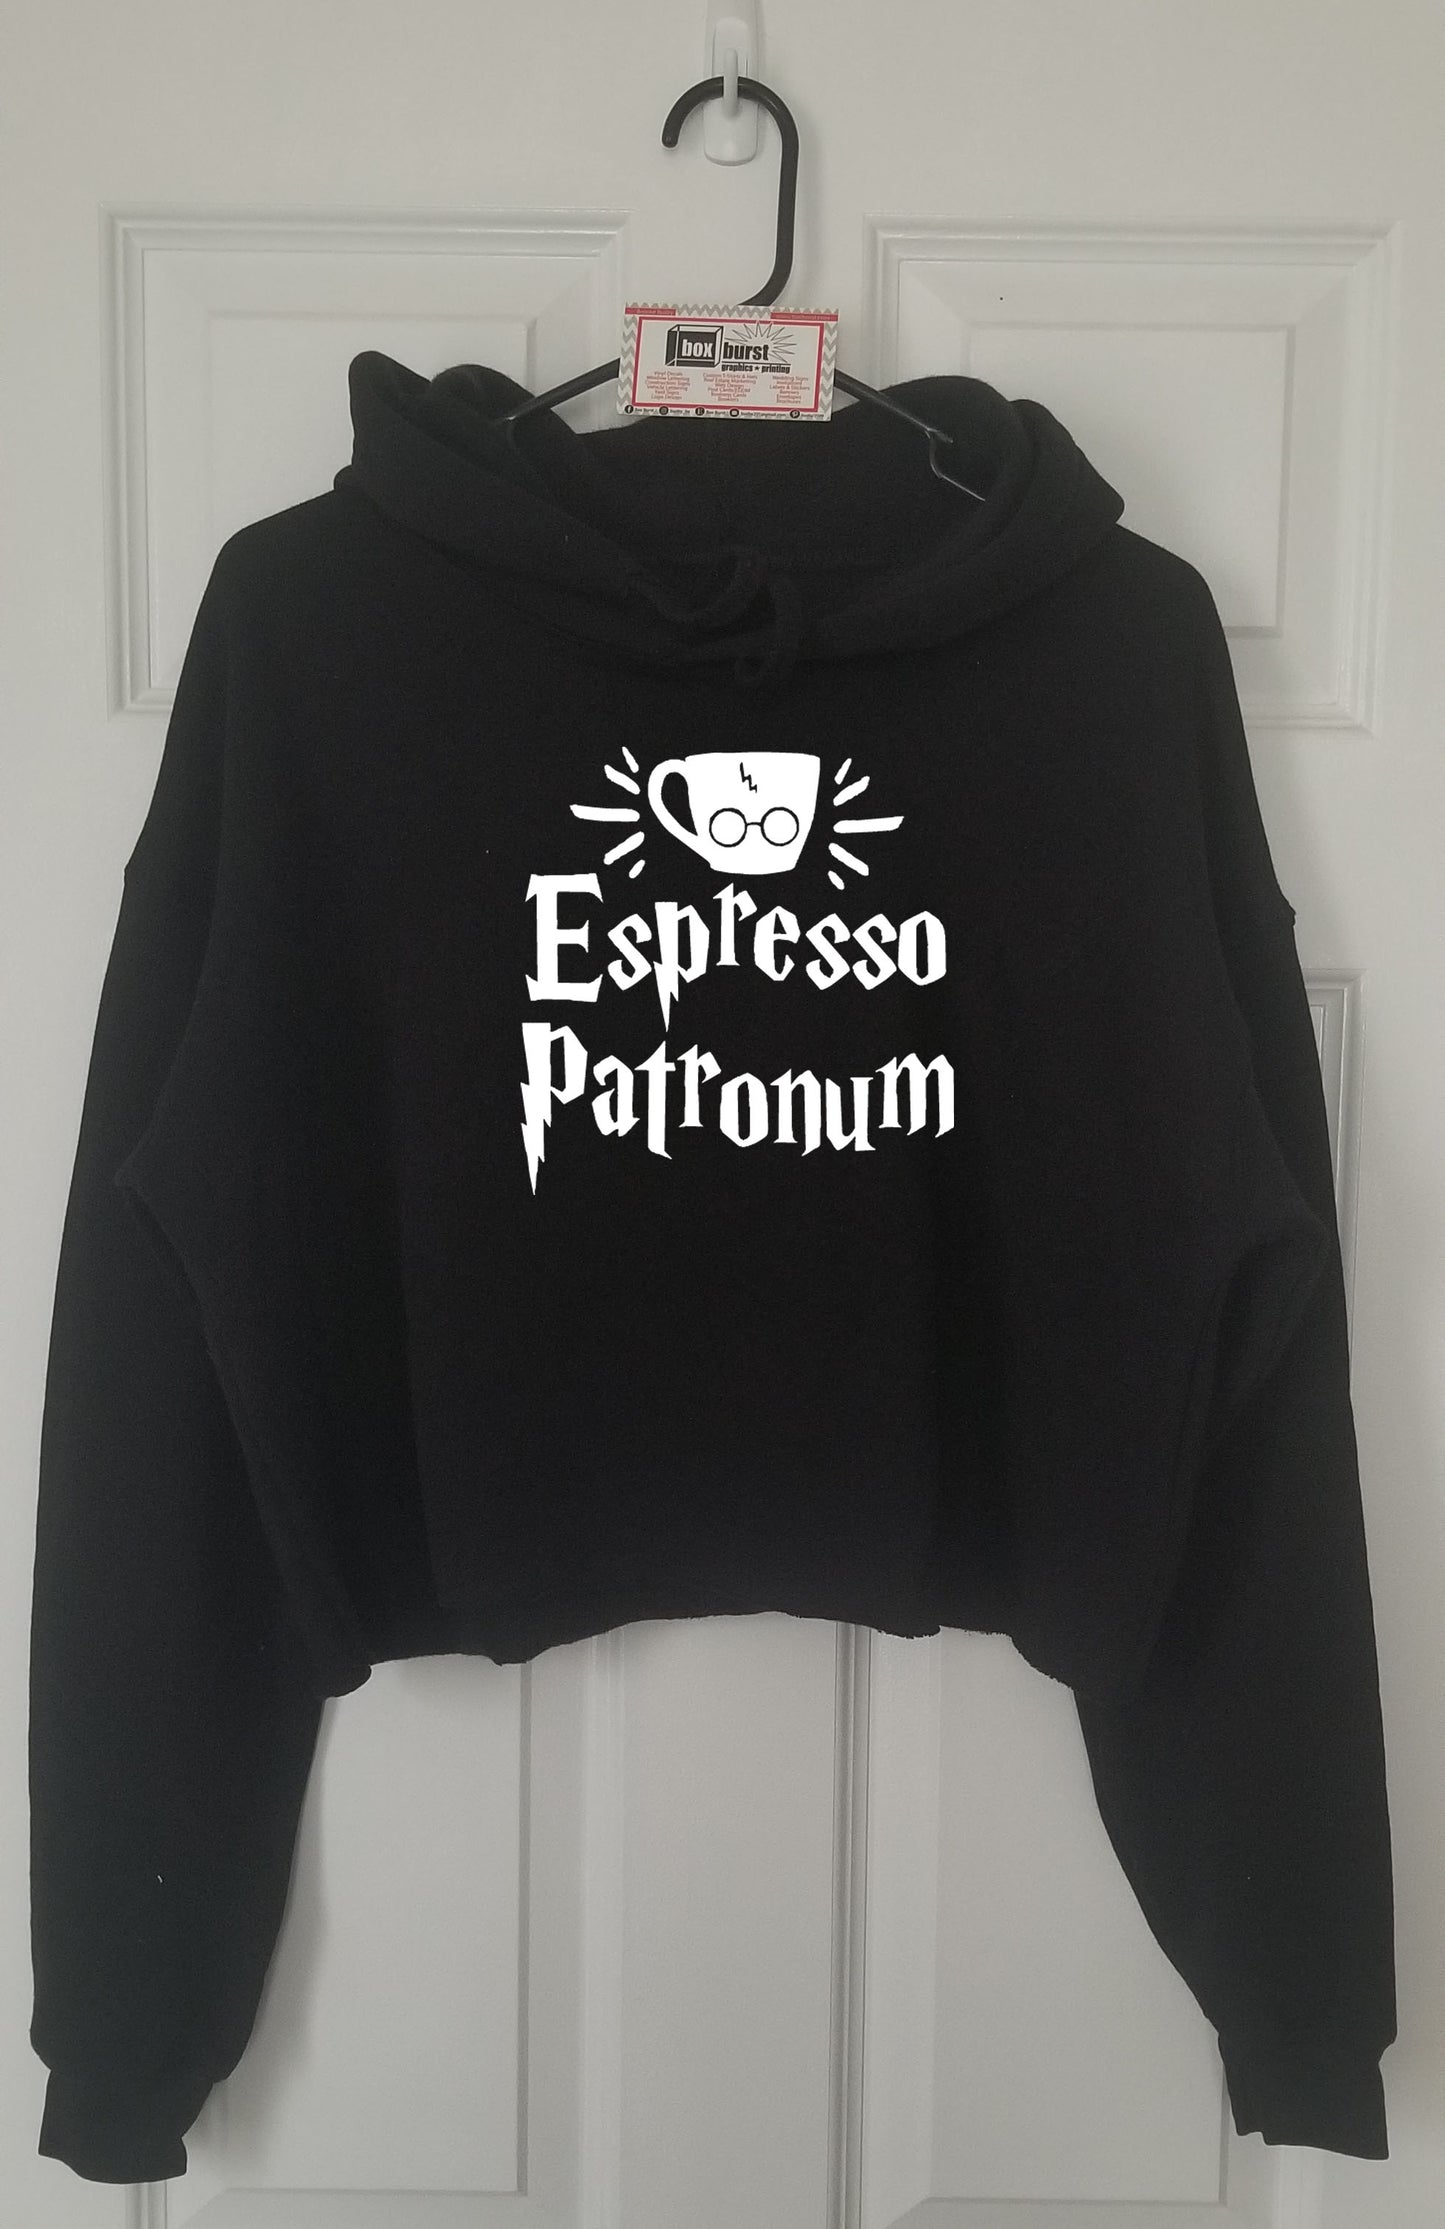 Potter Espresso Patronum Crop Hoodie